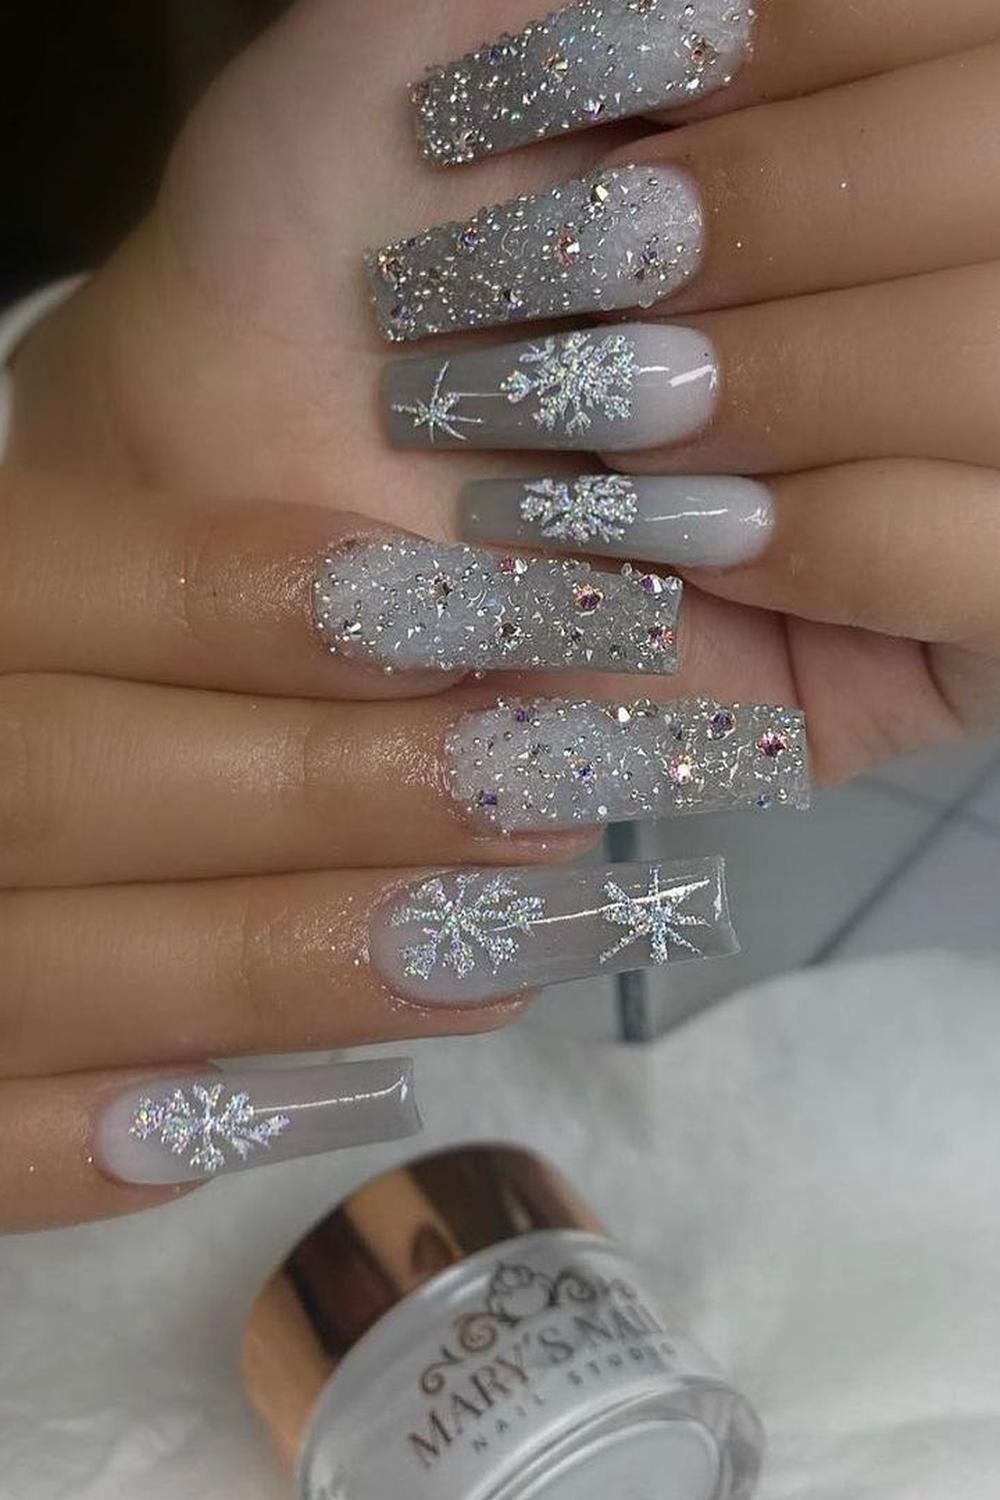 18 - Picture of White Glitter Nails